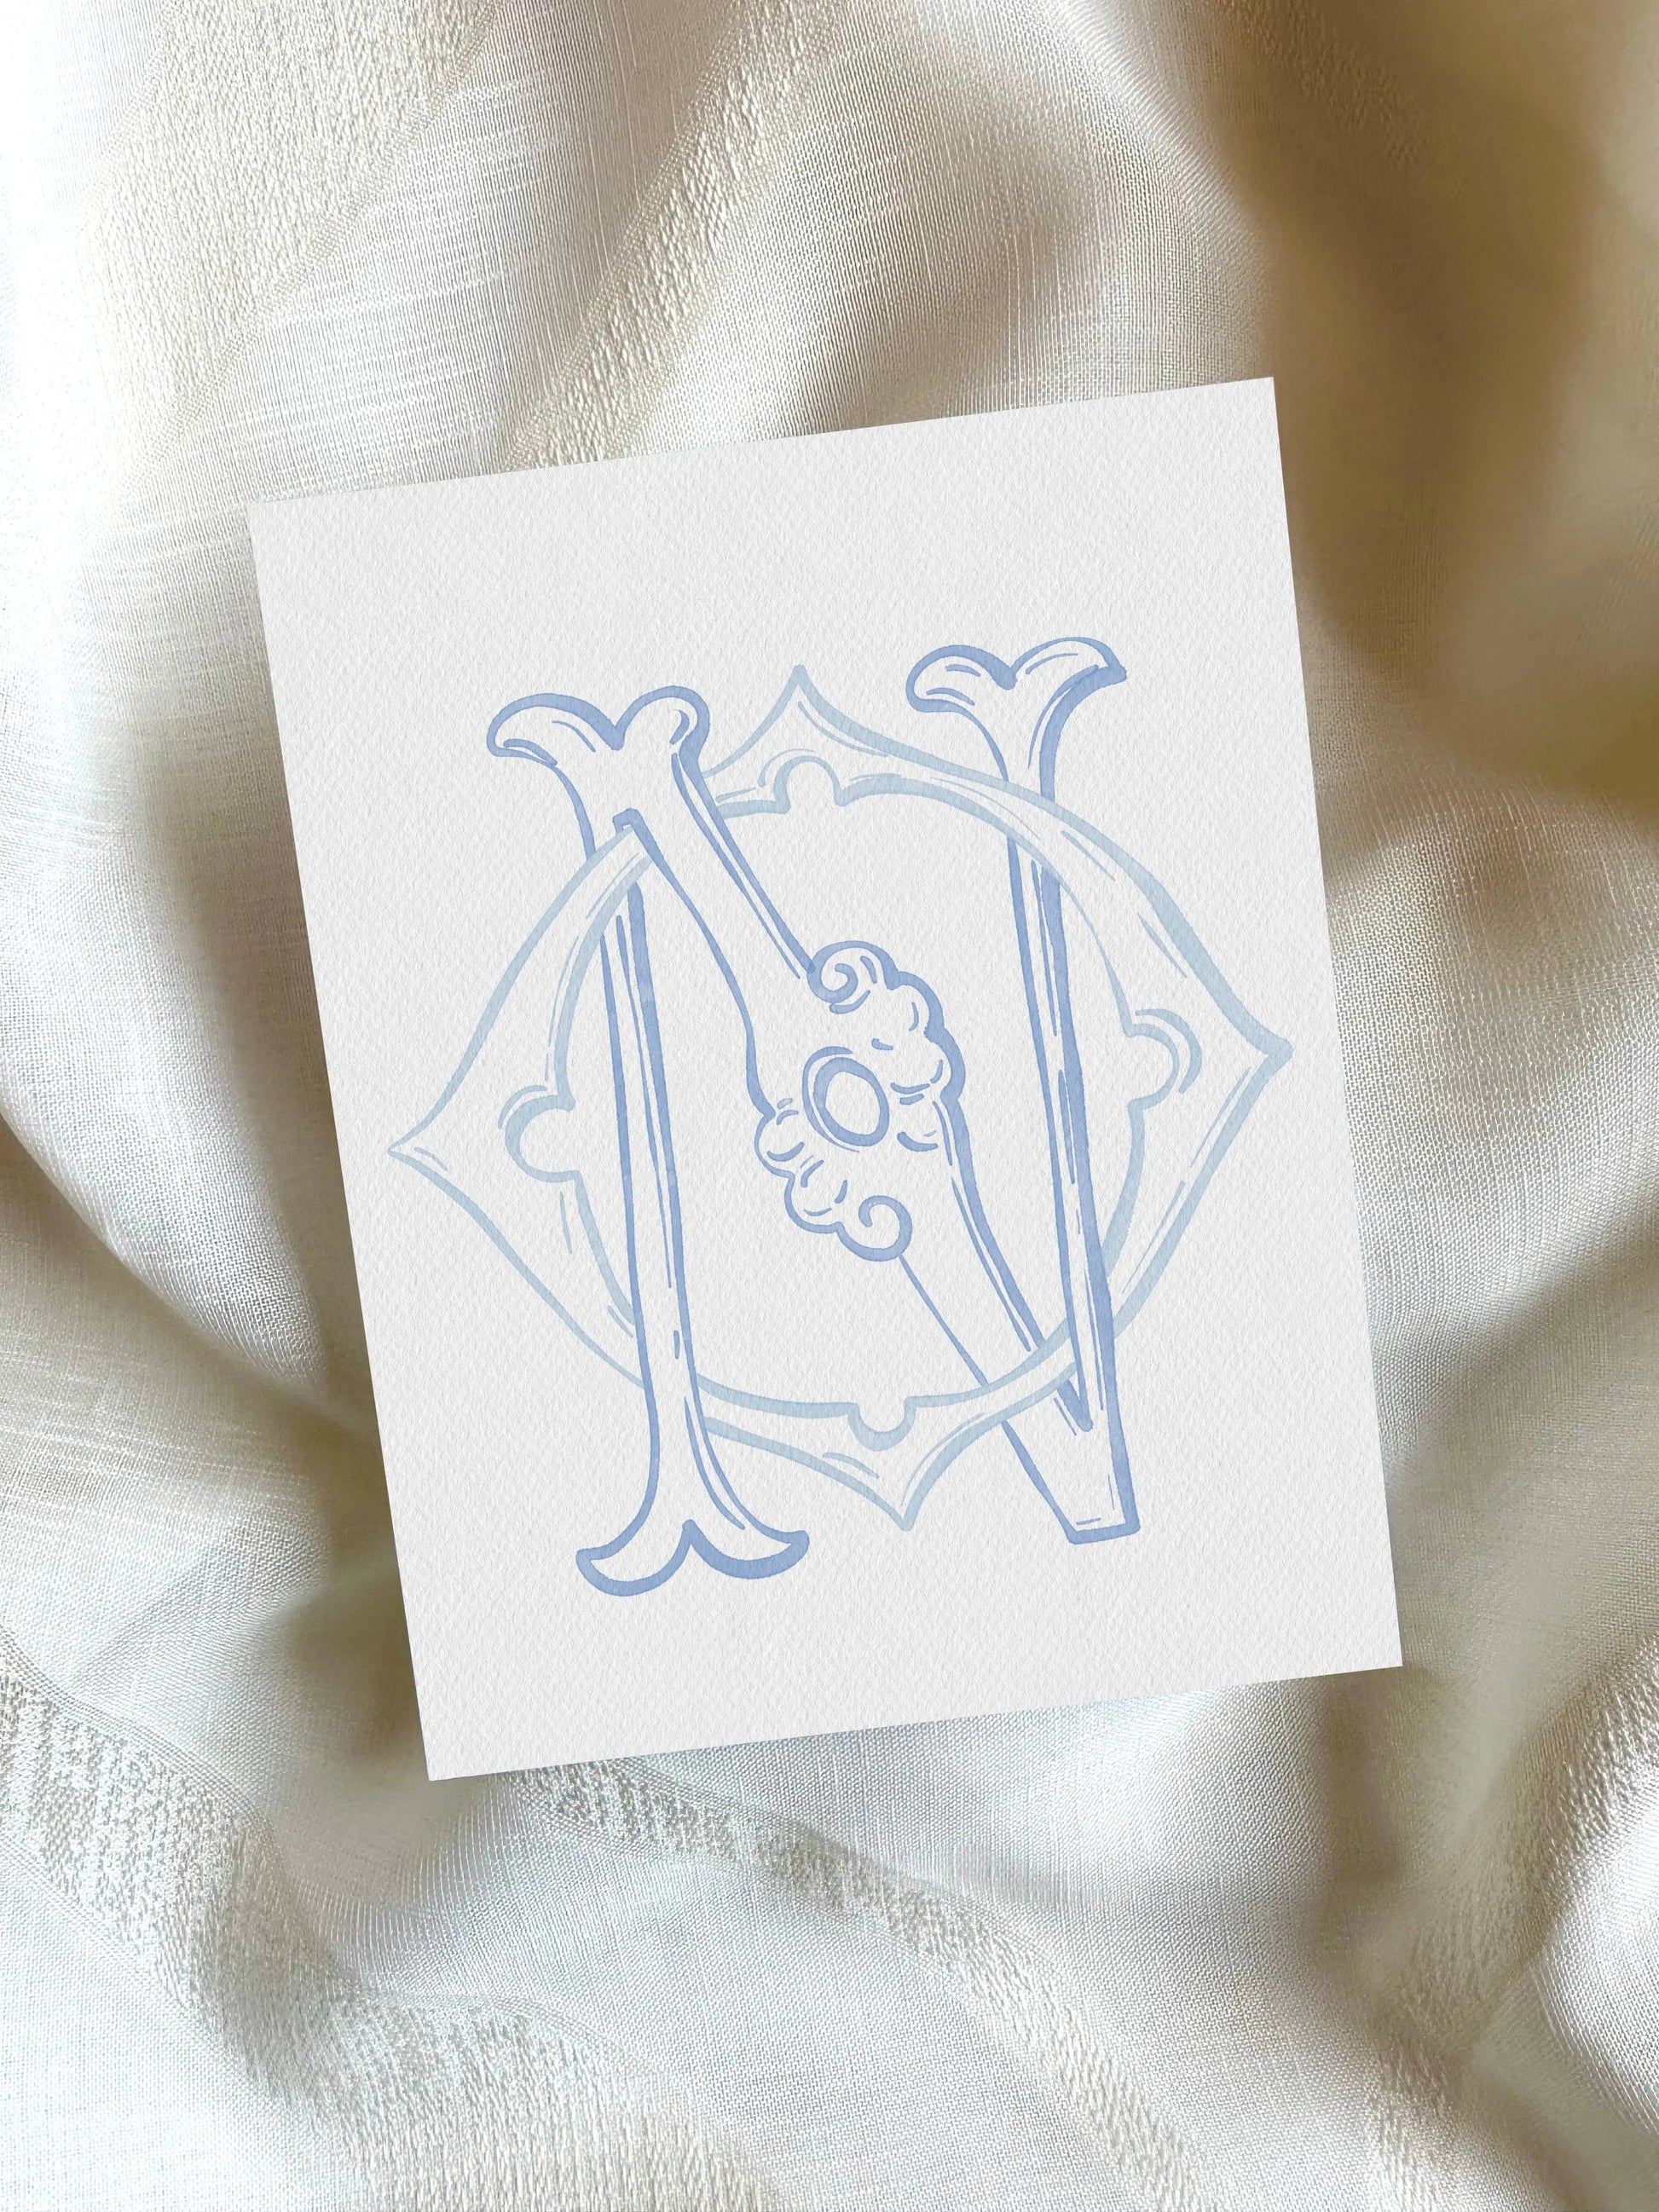 2 Letter Monogram with Letters NO | Digital Download - Wedding Monogram SVG, Personal Logo, Wedding Logo for Wedding Invitations The Wedding Crest Lab